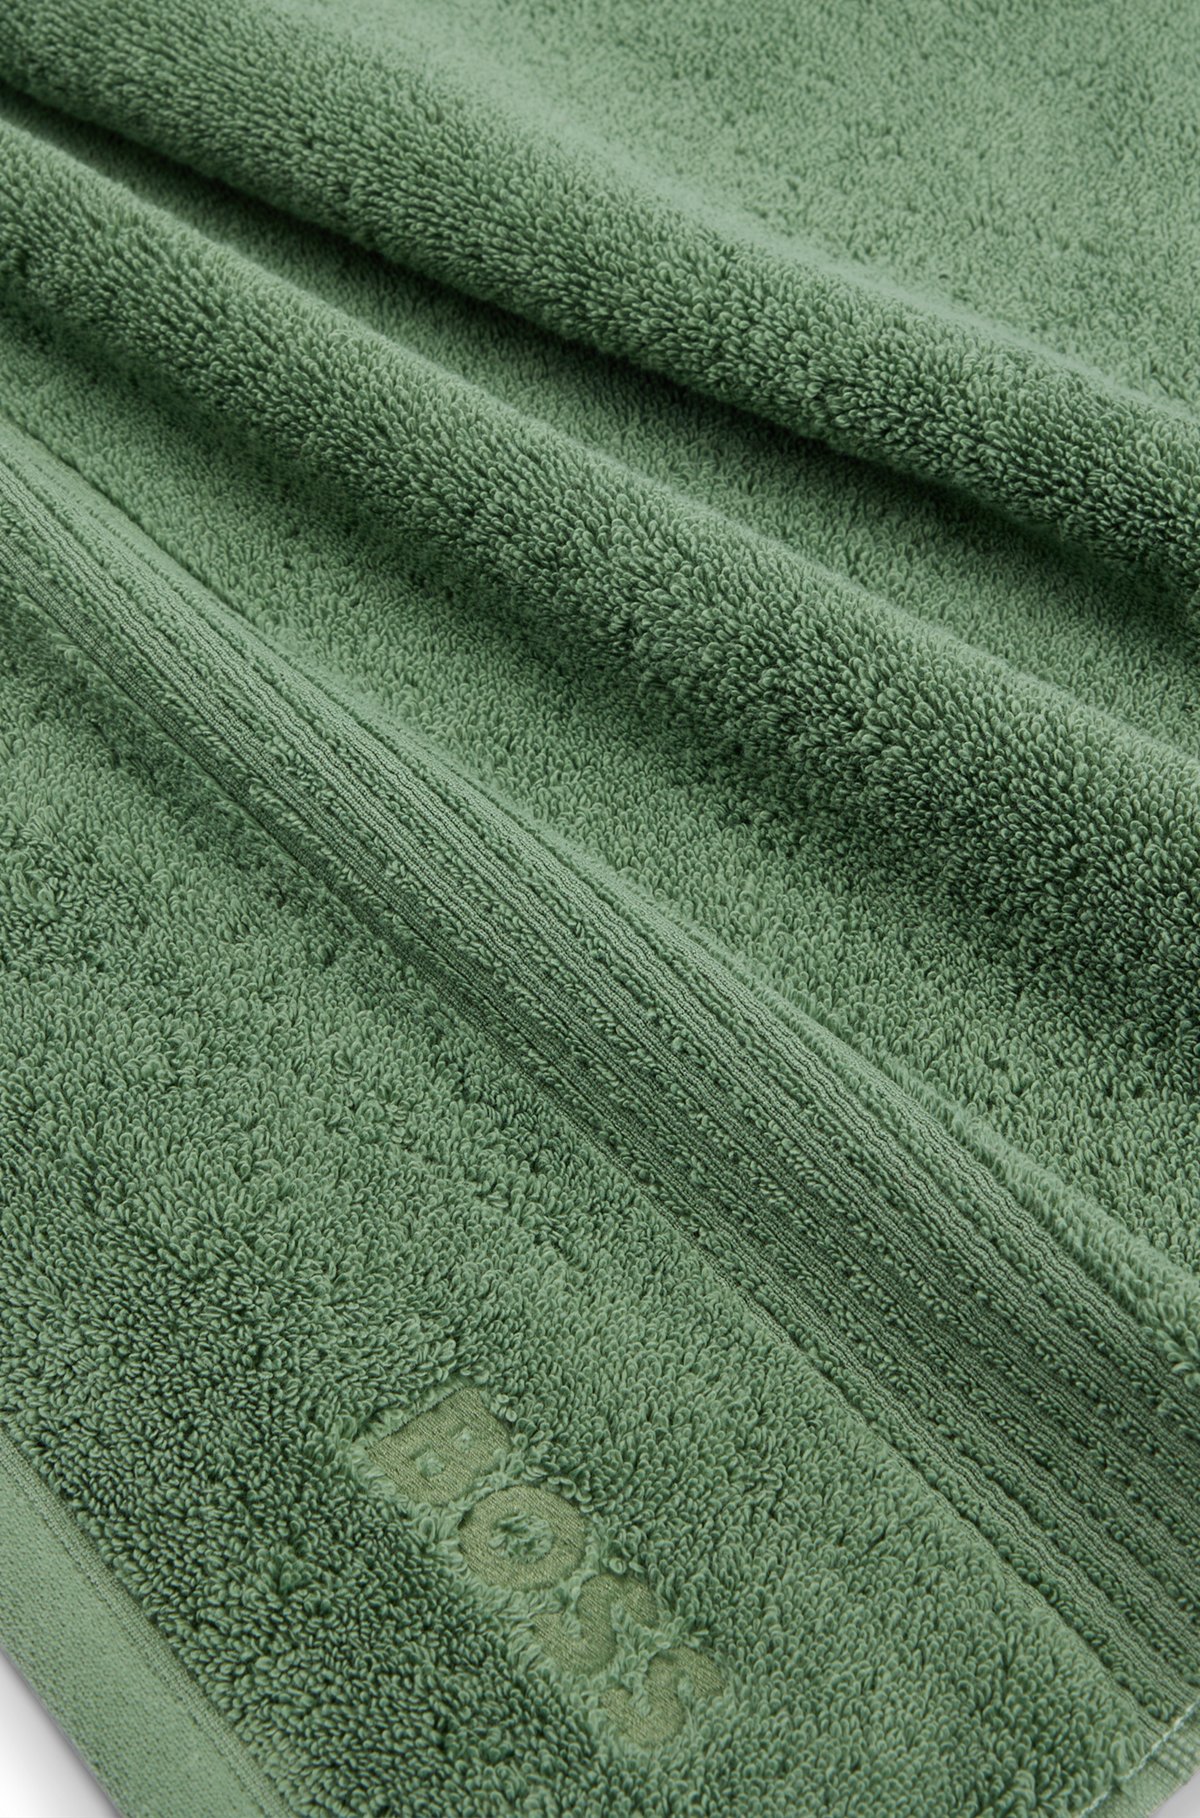 Logo hand towel in Aegean cotton, Green